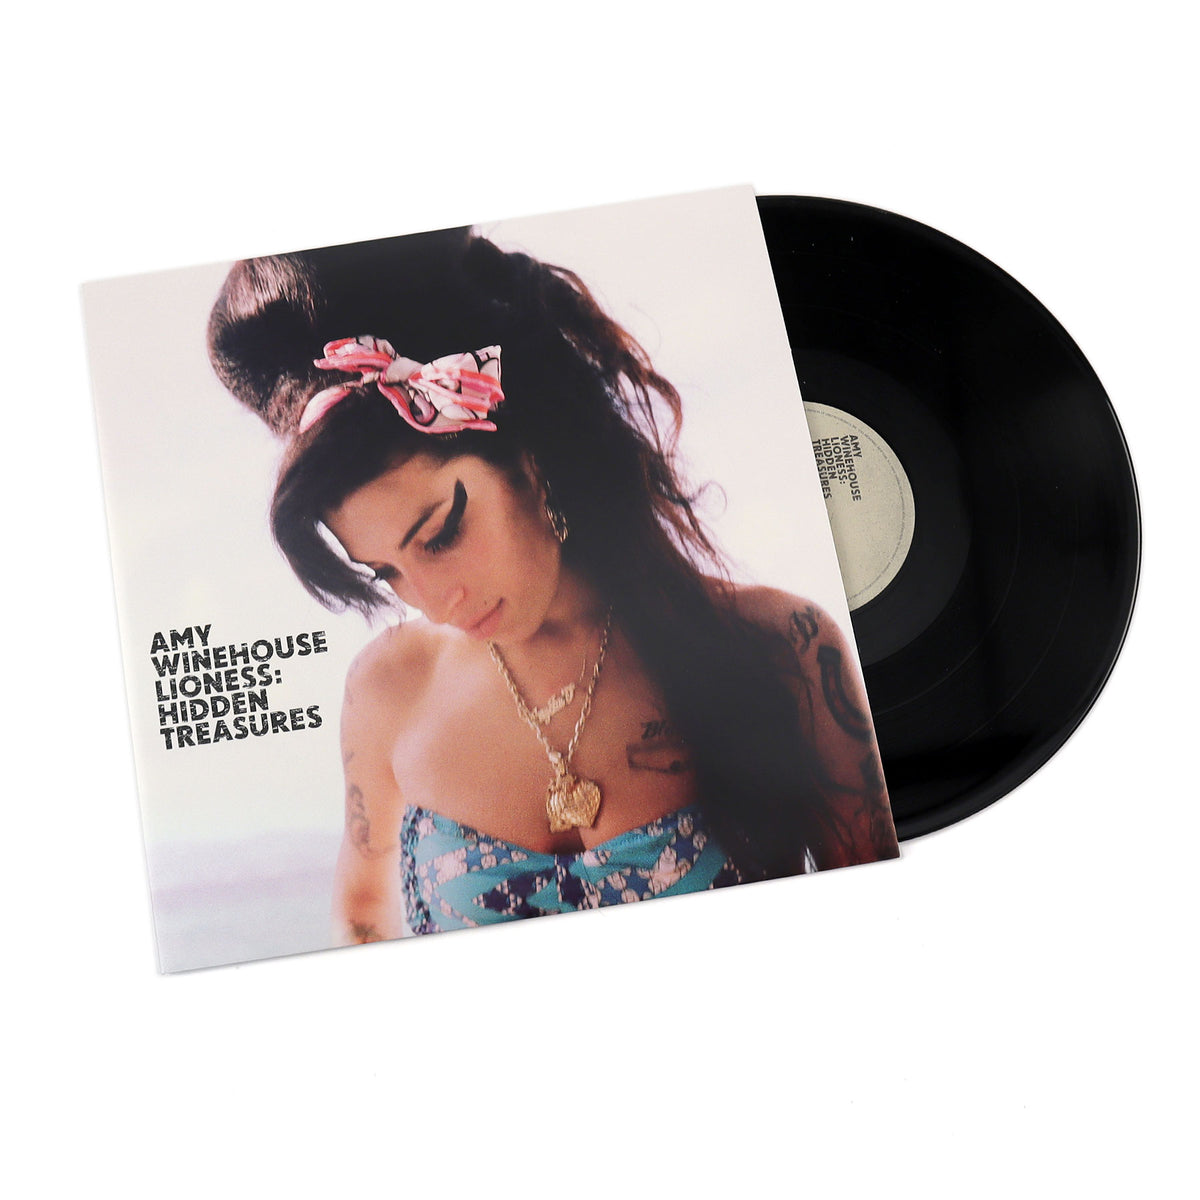 Amy Winehouse Lioness: Hidden Treasures LP - Amy Winehouse